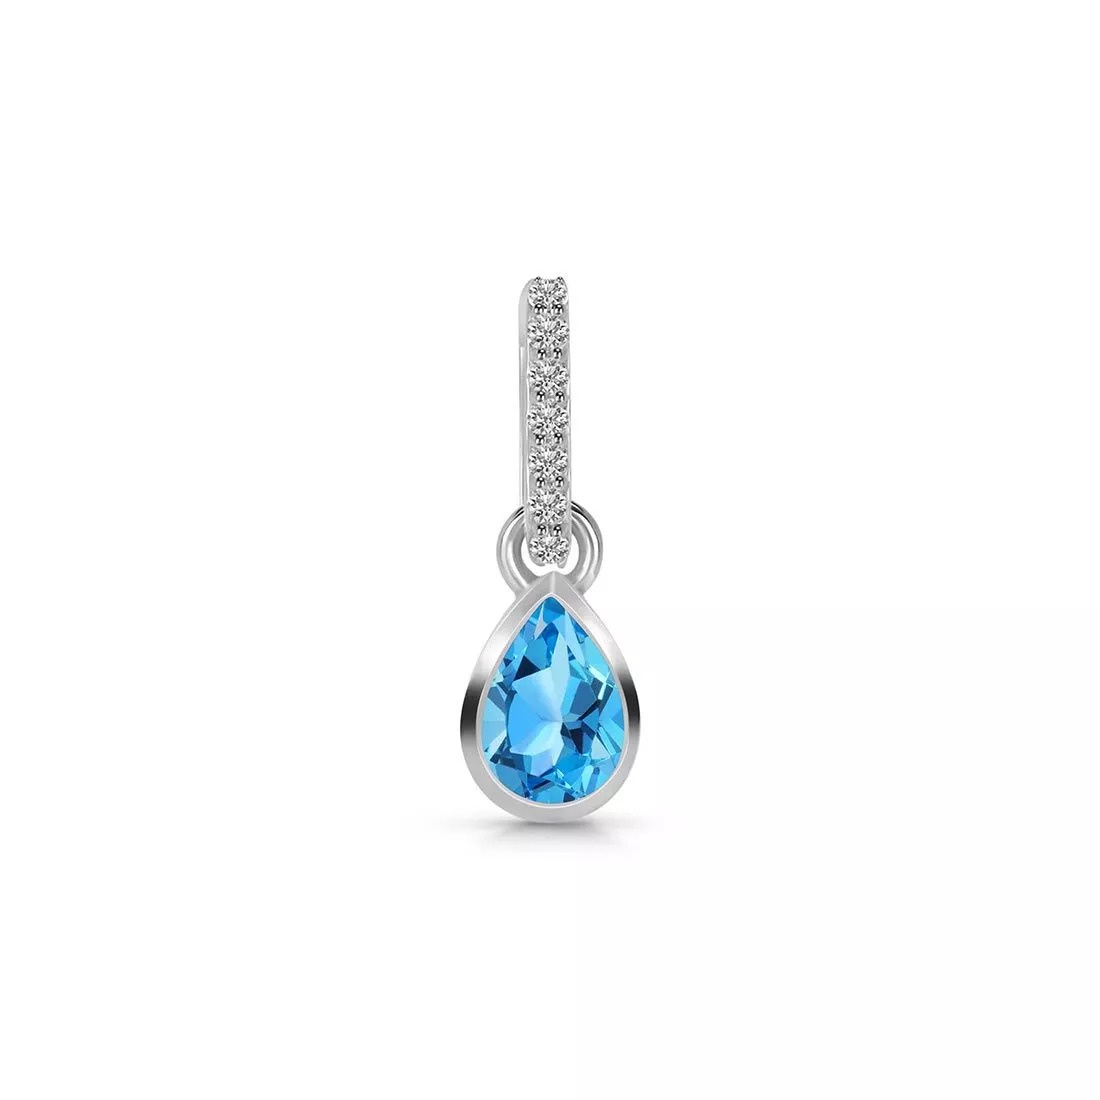 Swiss Blue Topaz: The Quam Perfectum Jewel for Ravishing Jewelry